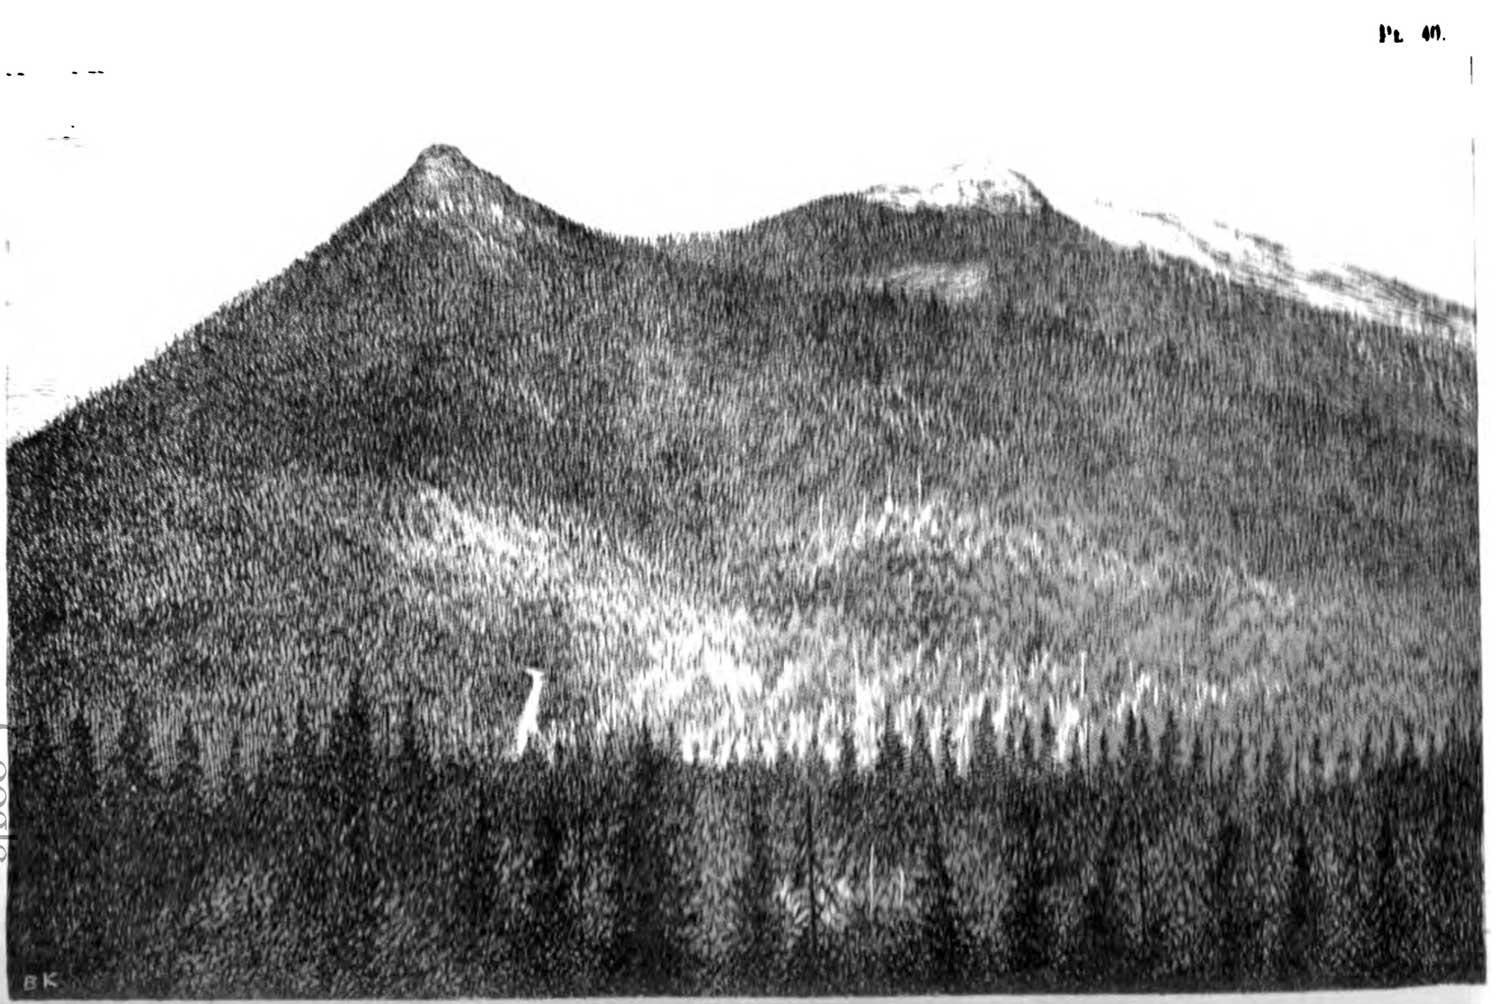 Plate 40. Mount Cheadle. George Monro Grant, 1871